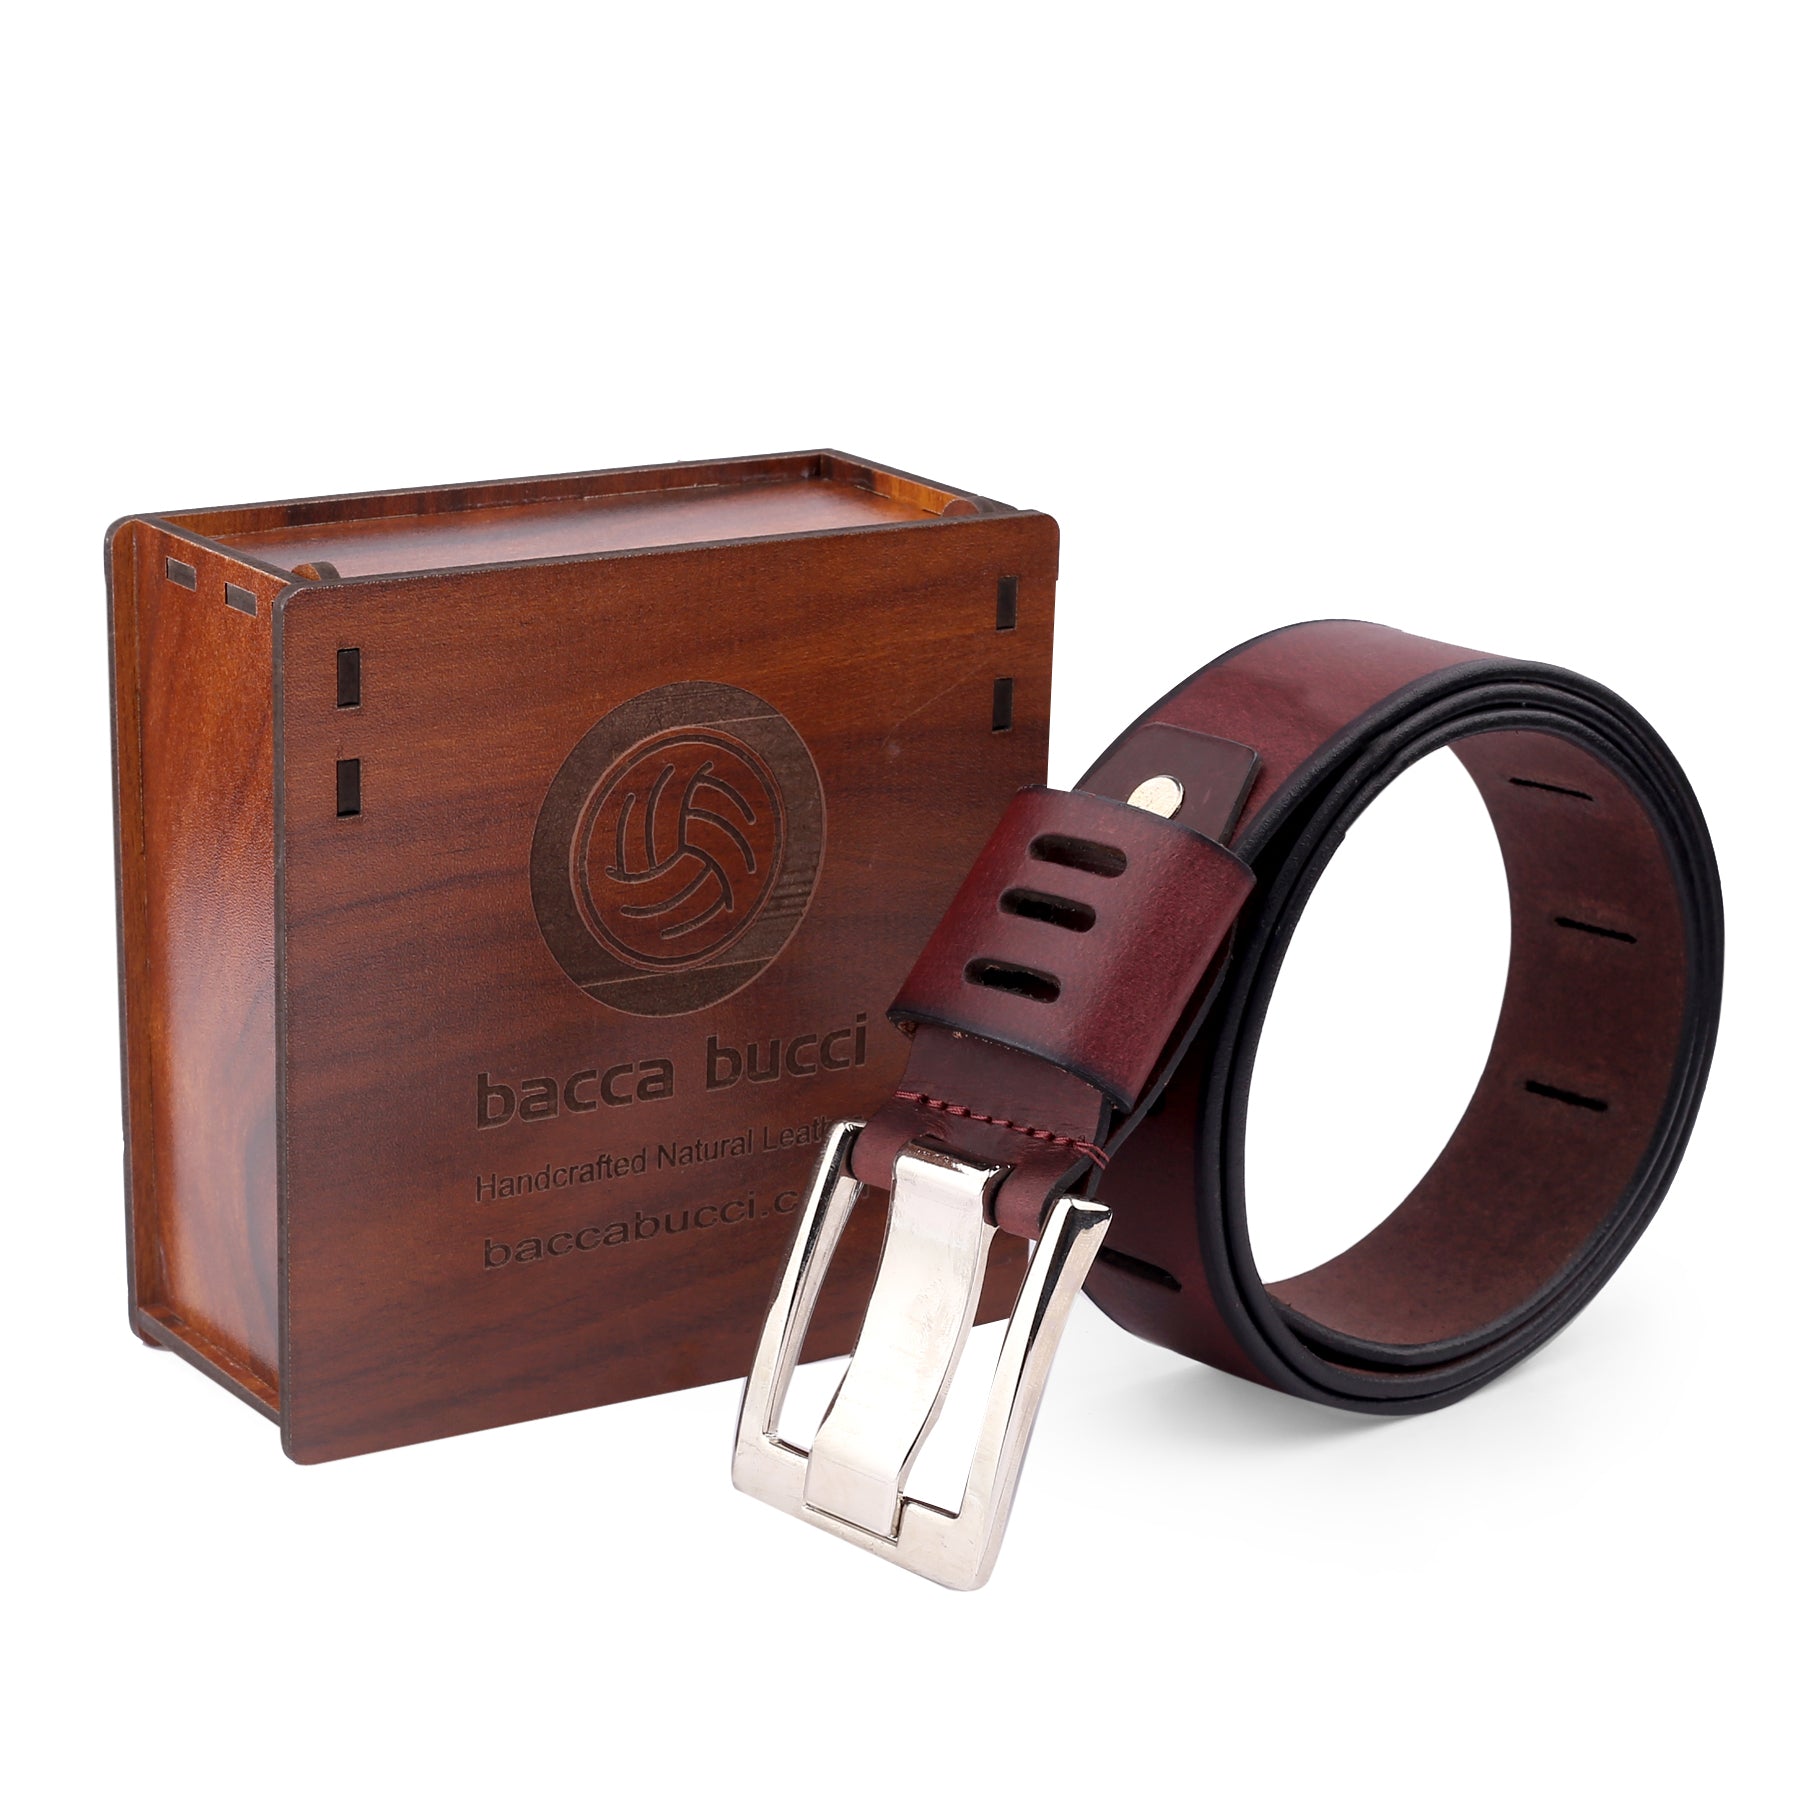 Bacca Bucci Full grain genuine leather Work Belt for Men